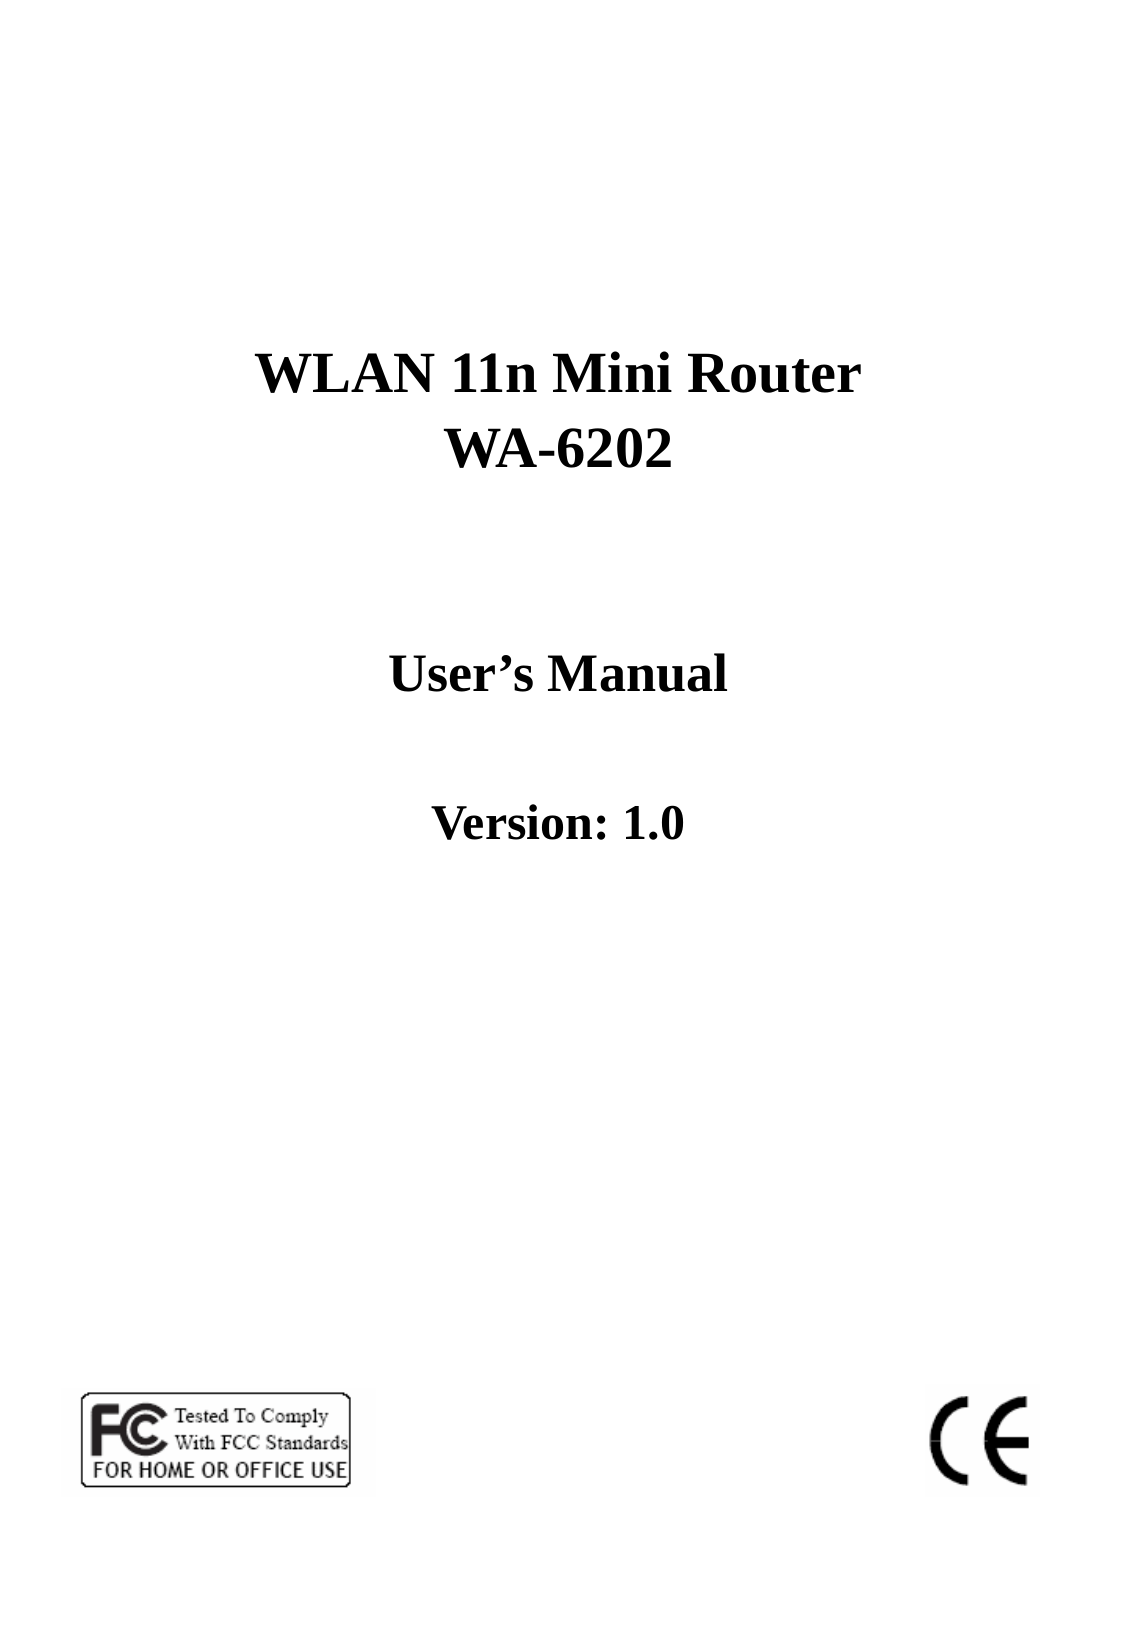       WLAN 11n Mini Router WA-6202   User’s Manual  Version: 1.0                                                               